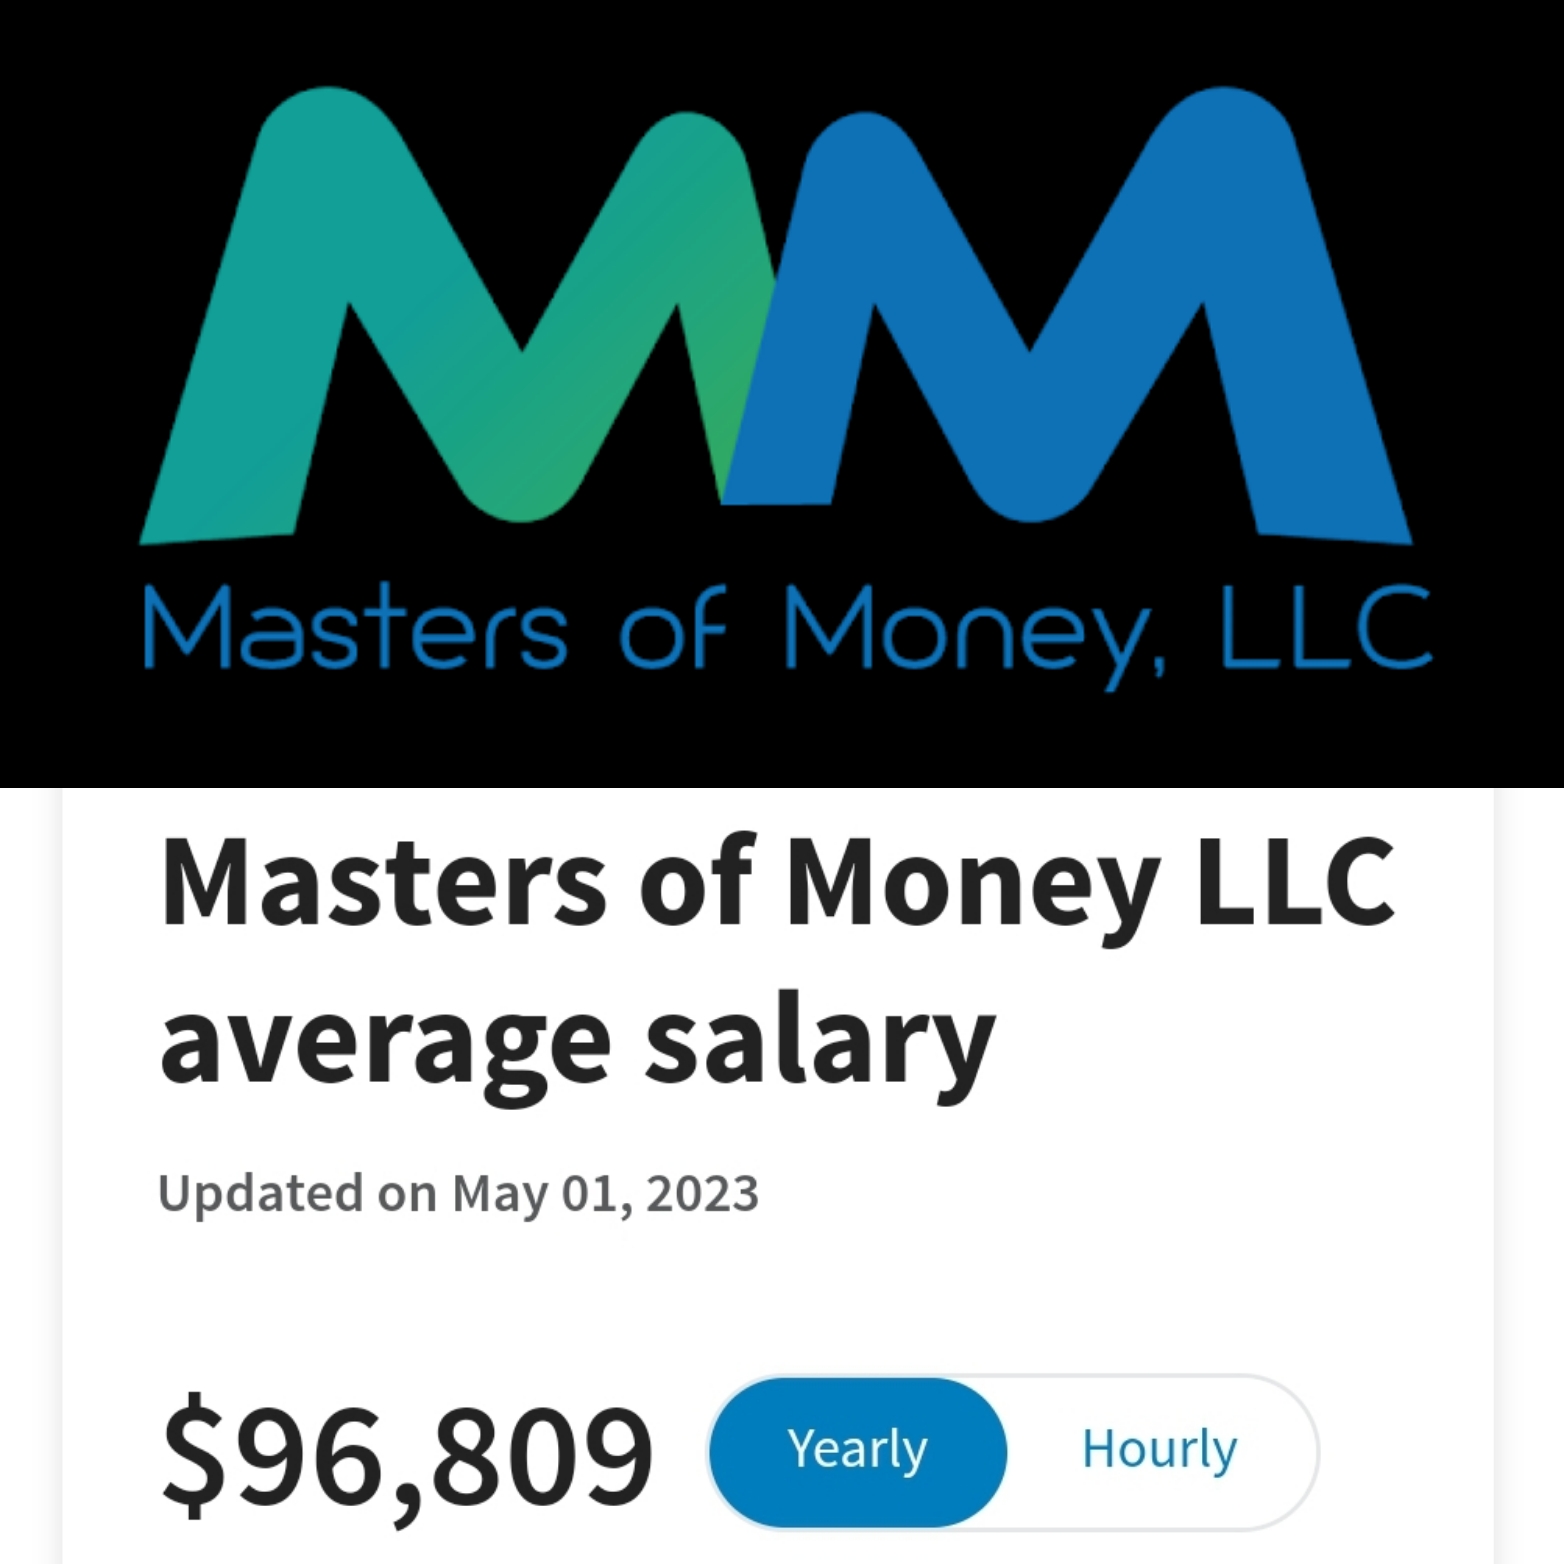 Masters of Money LLC Average Salary Collage